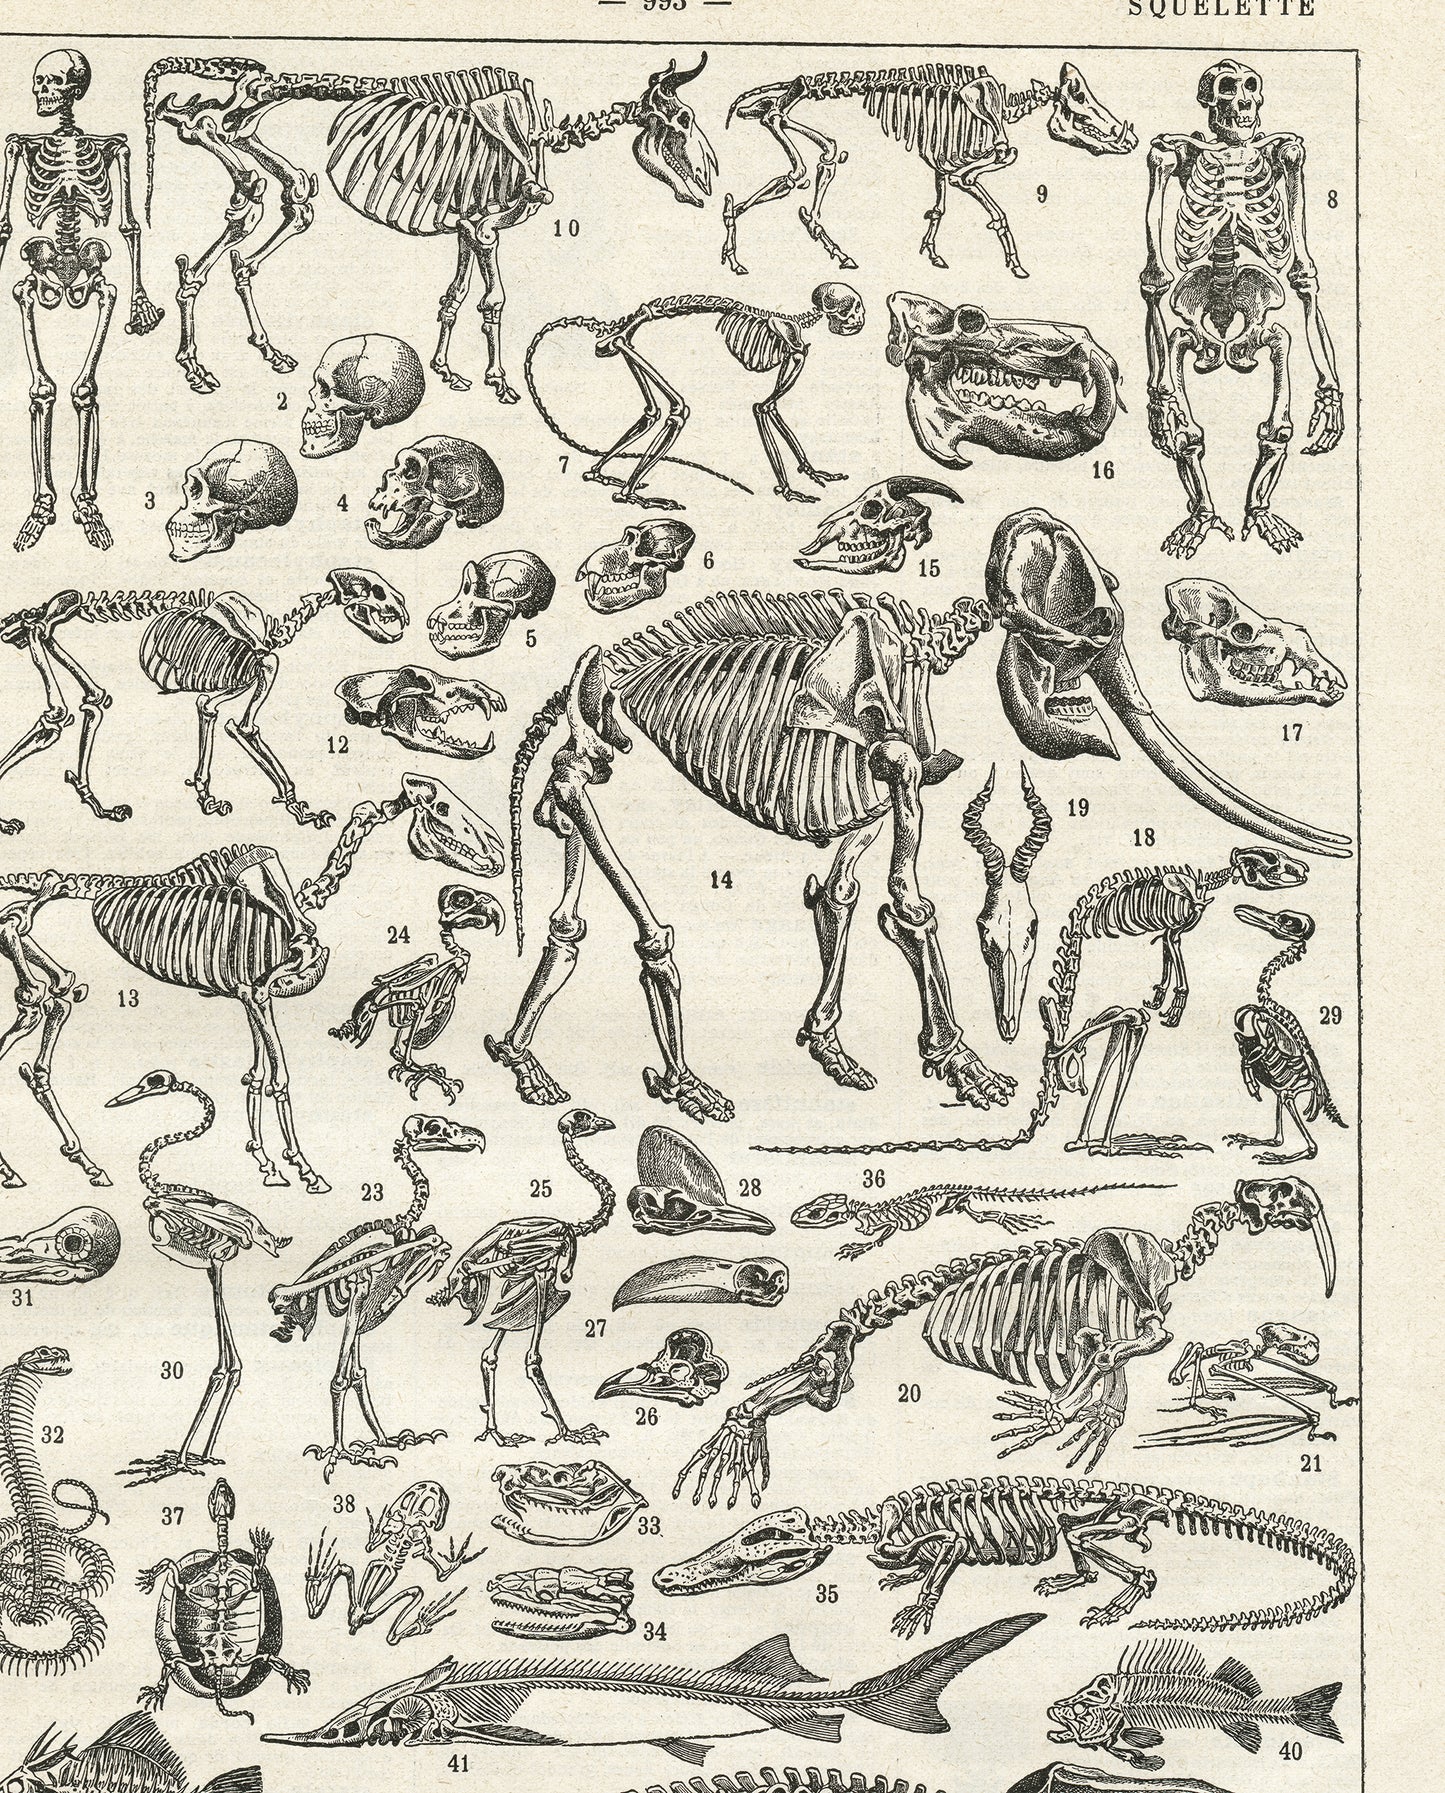 Human & animal skeleton anatomy poster in black and white